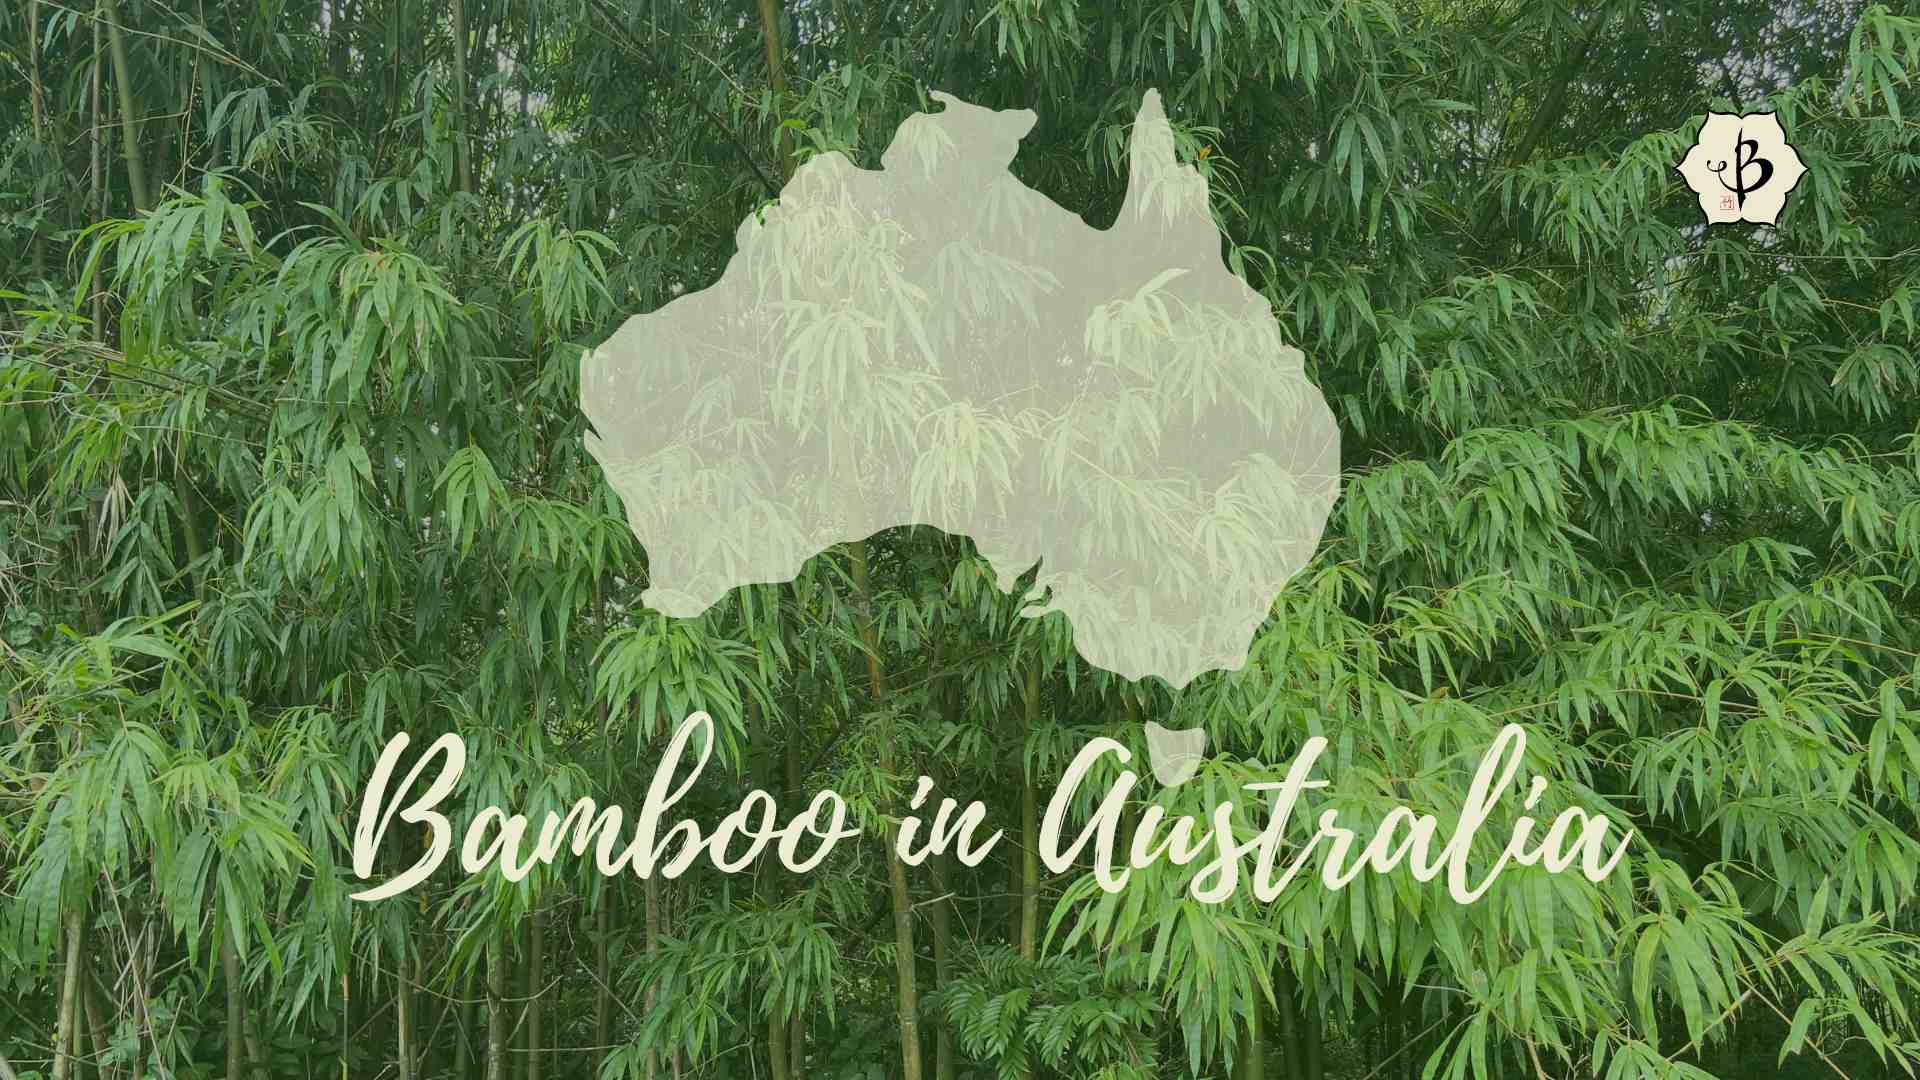 Bamboo in Australia image